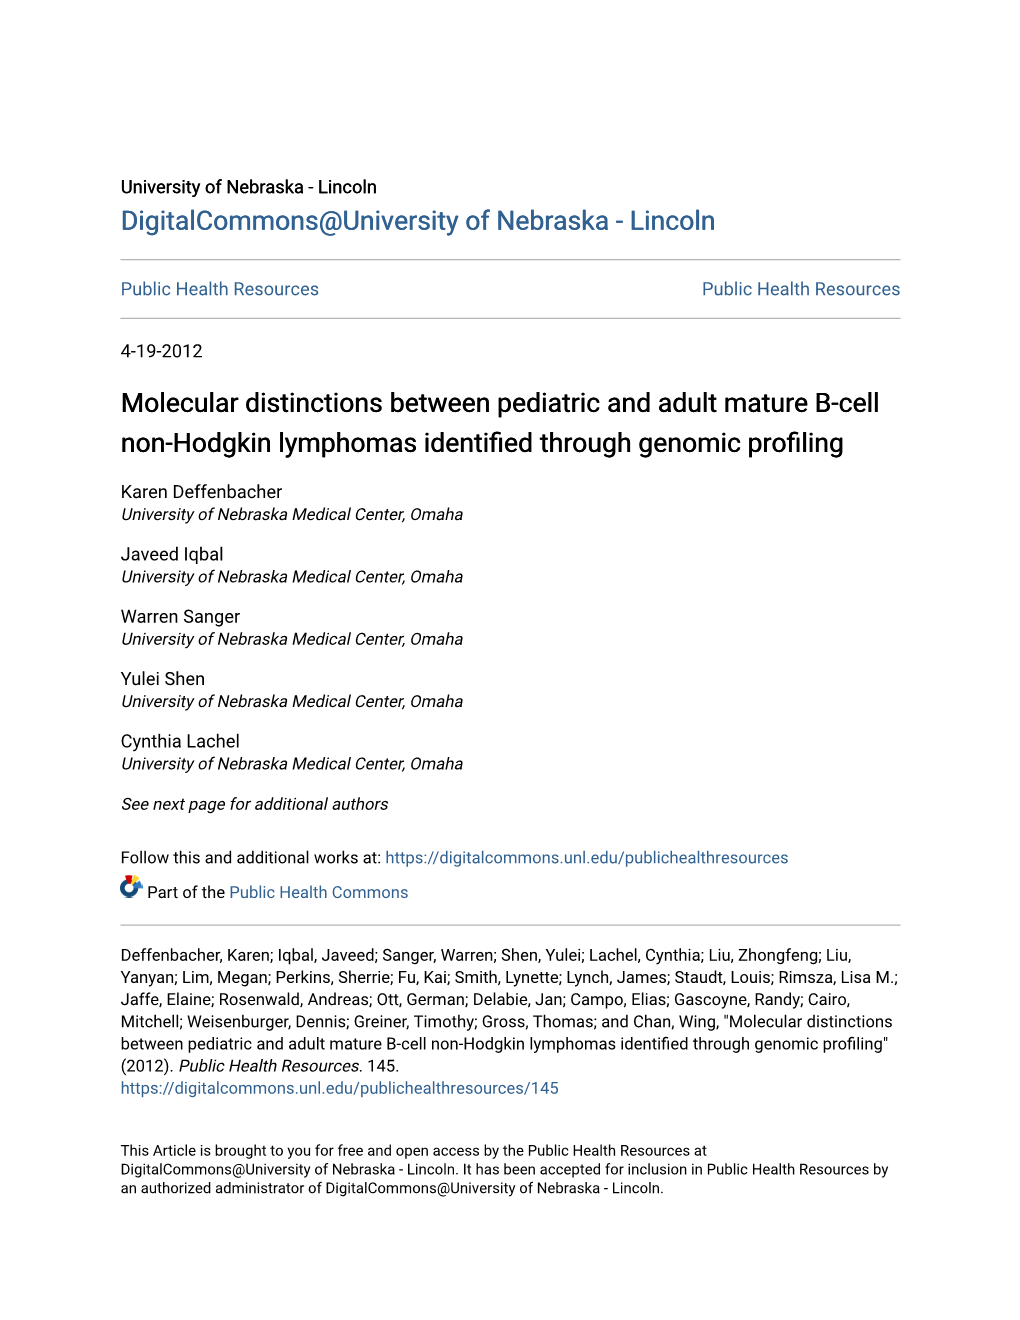 Molecular Distinctions Between Pediatric and Adult Mature B-Cell Non-Hodgkin Lymphomas Identified Through Genomic Profiling